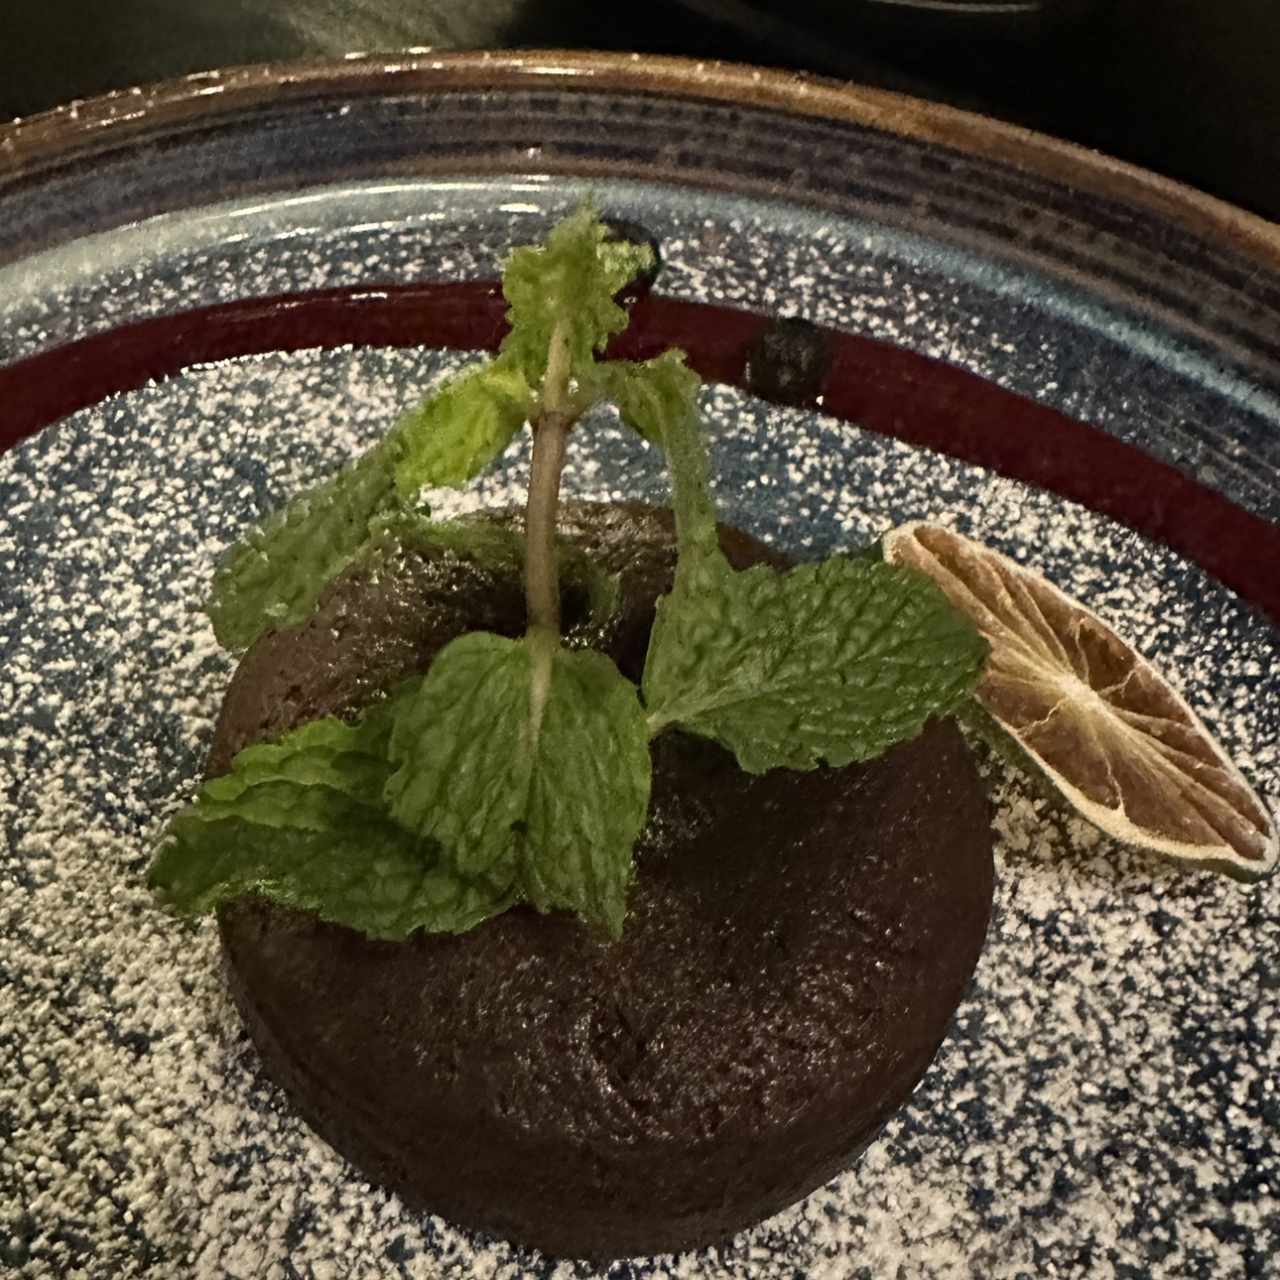 Chocolate dessert 